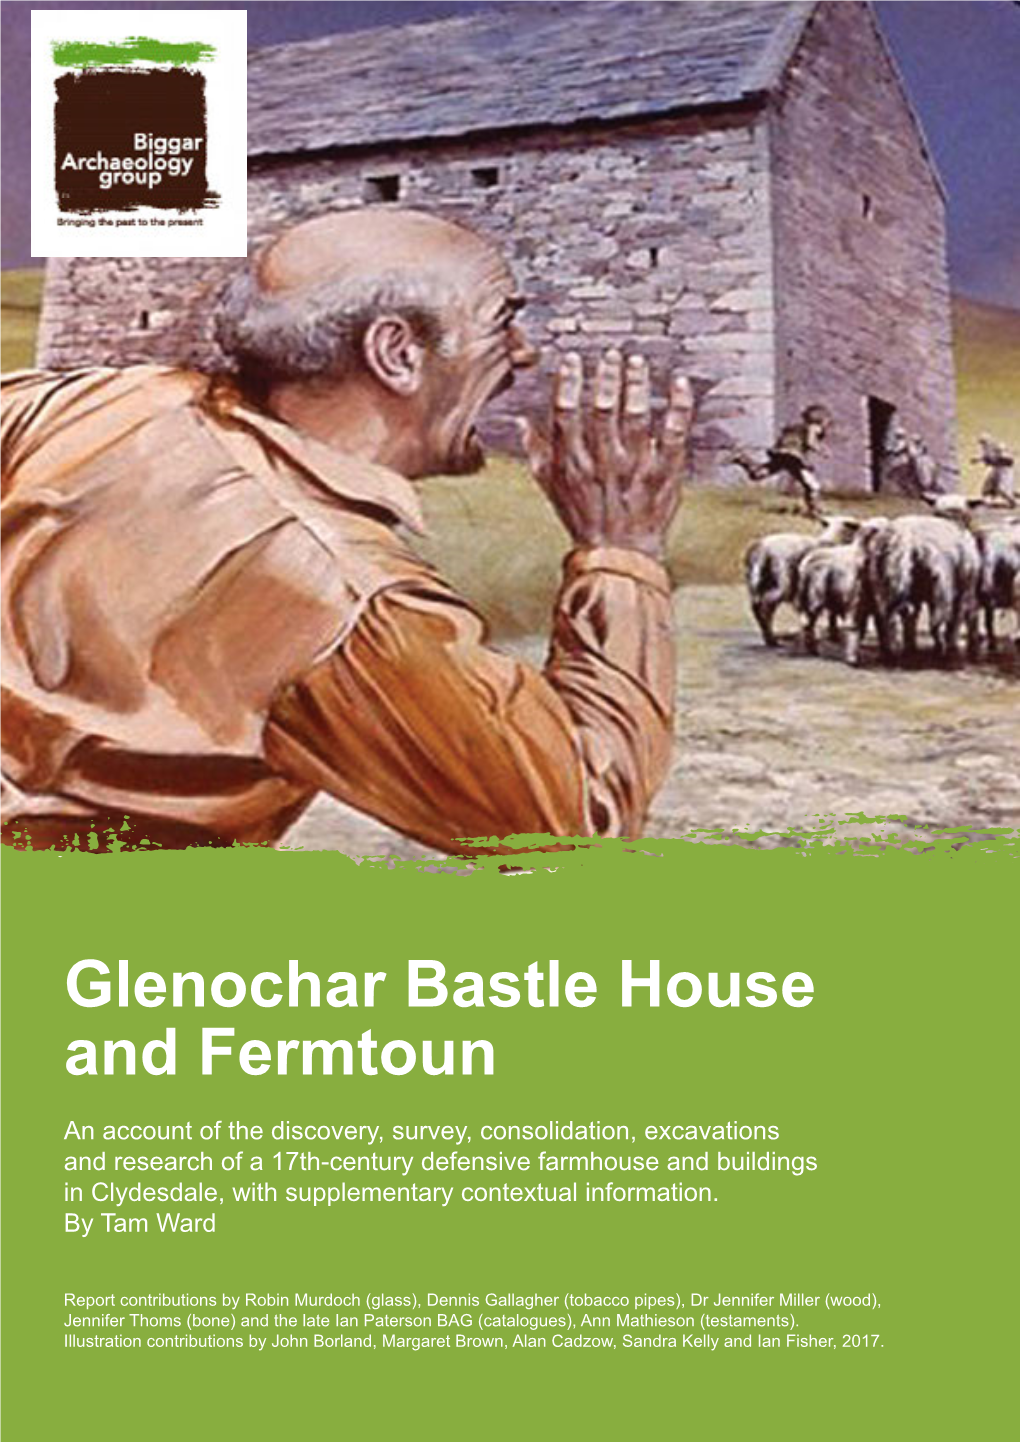 Glenochar Bastle House and Fermtoun